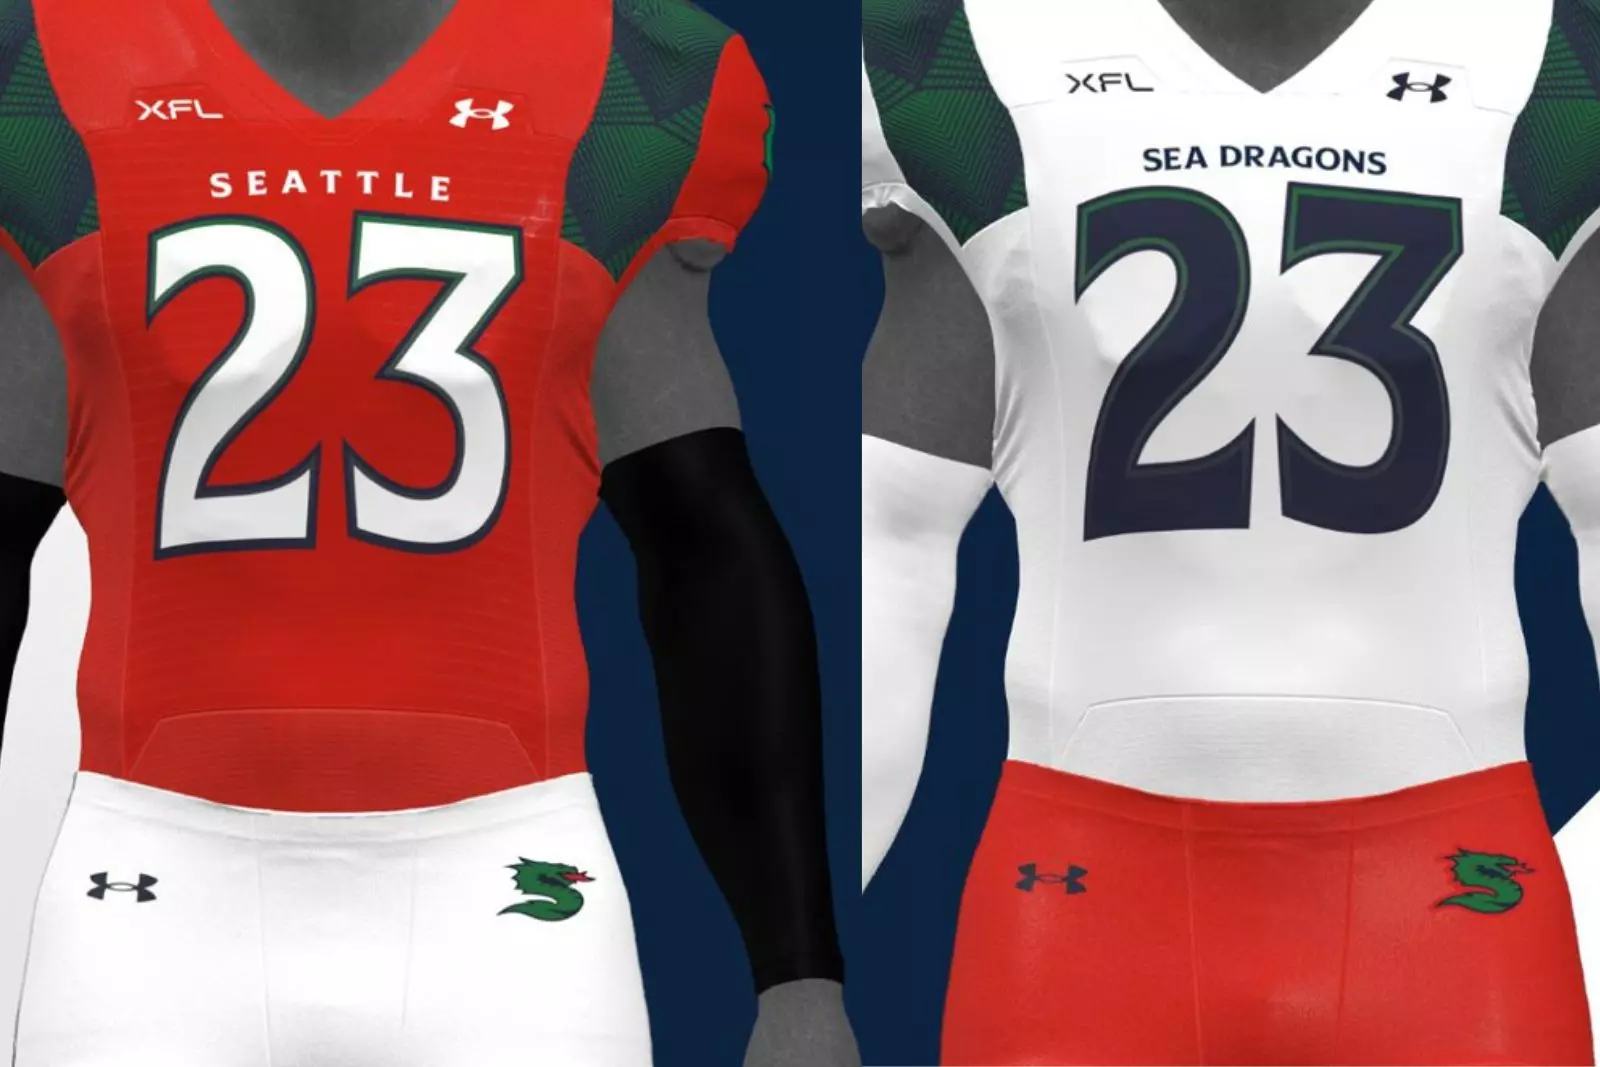 XFL Seattle Sea Dragons 23 Replica Game Jersey - Size L